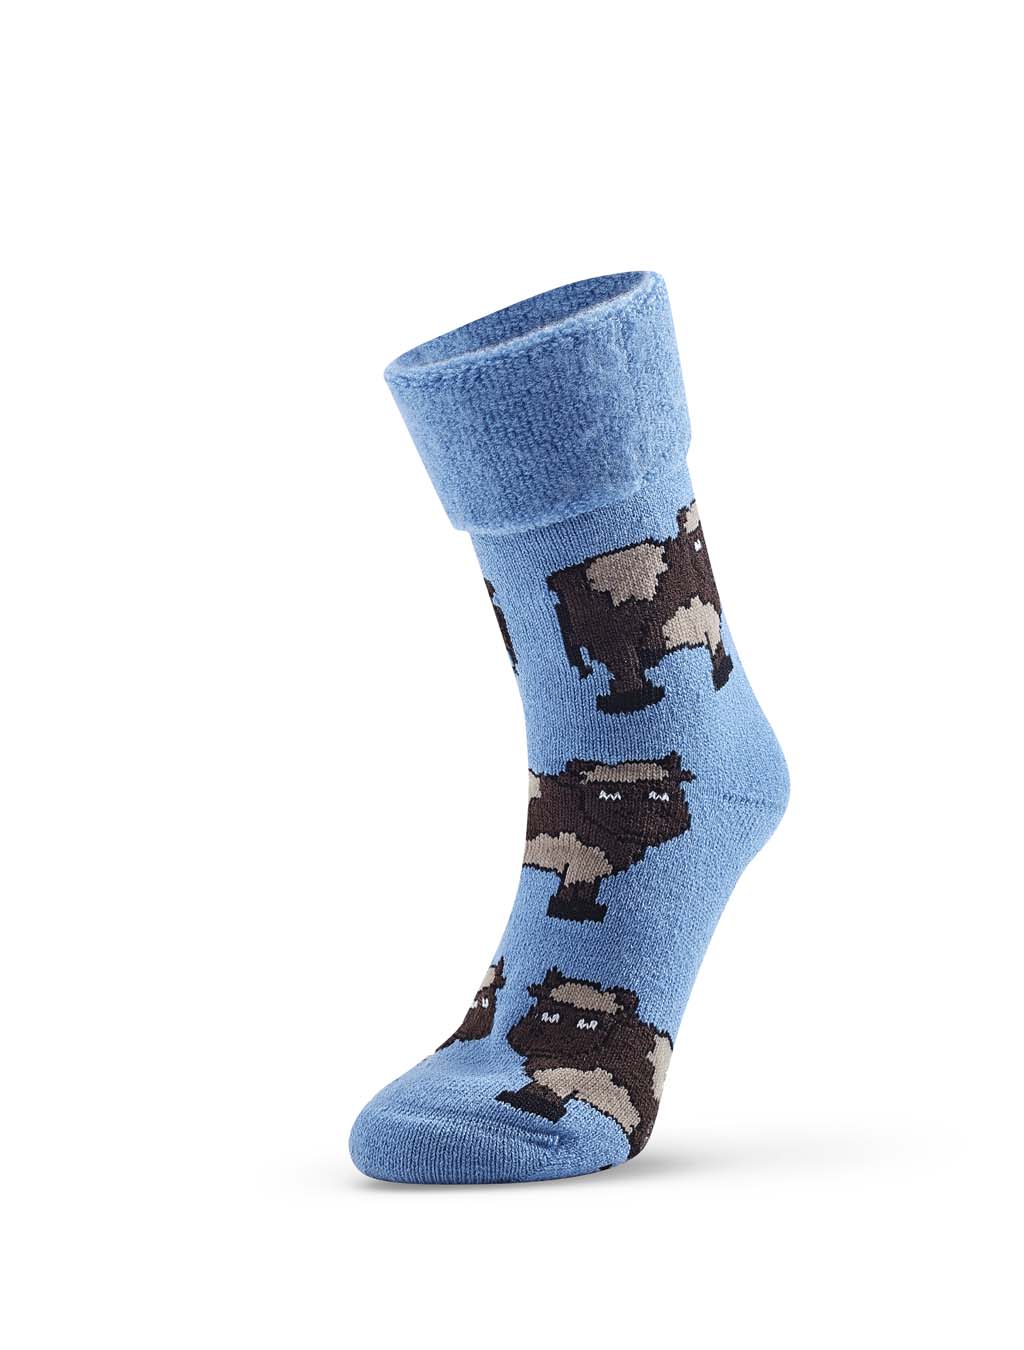 Cow Bed Socks - Blue